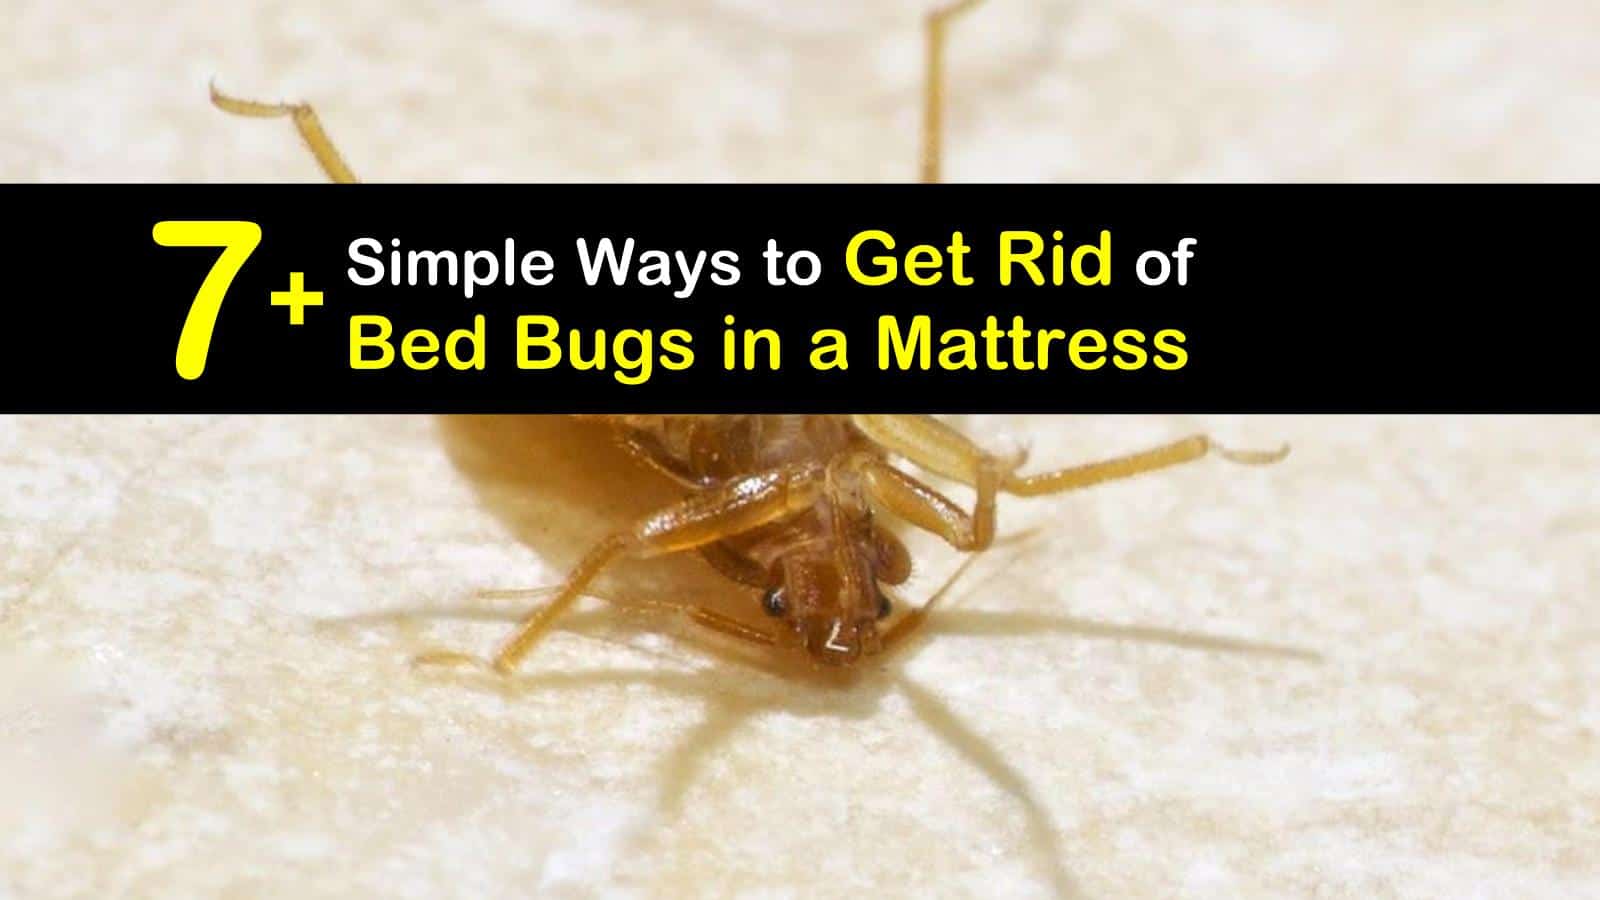 replacing mattress get rid of bed bugs